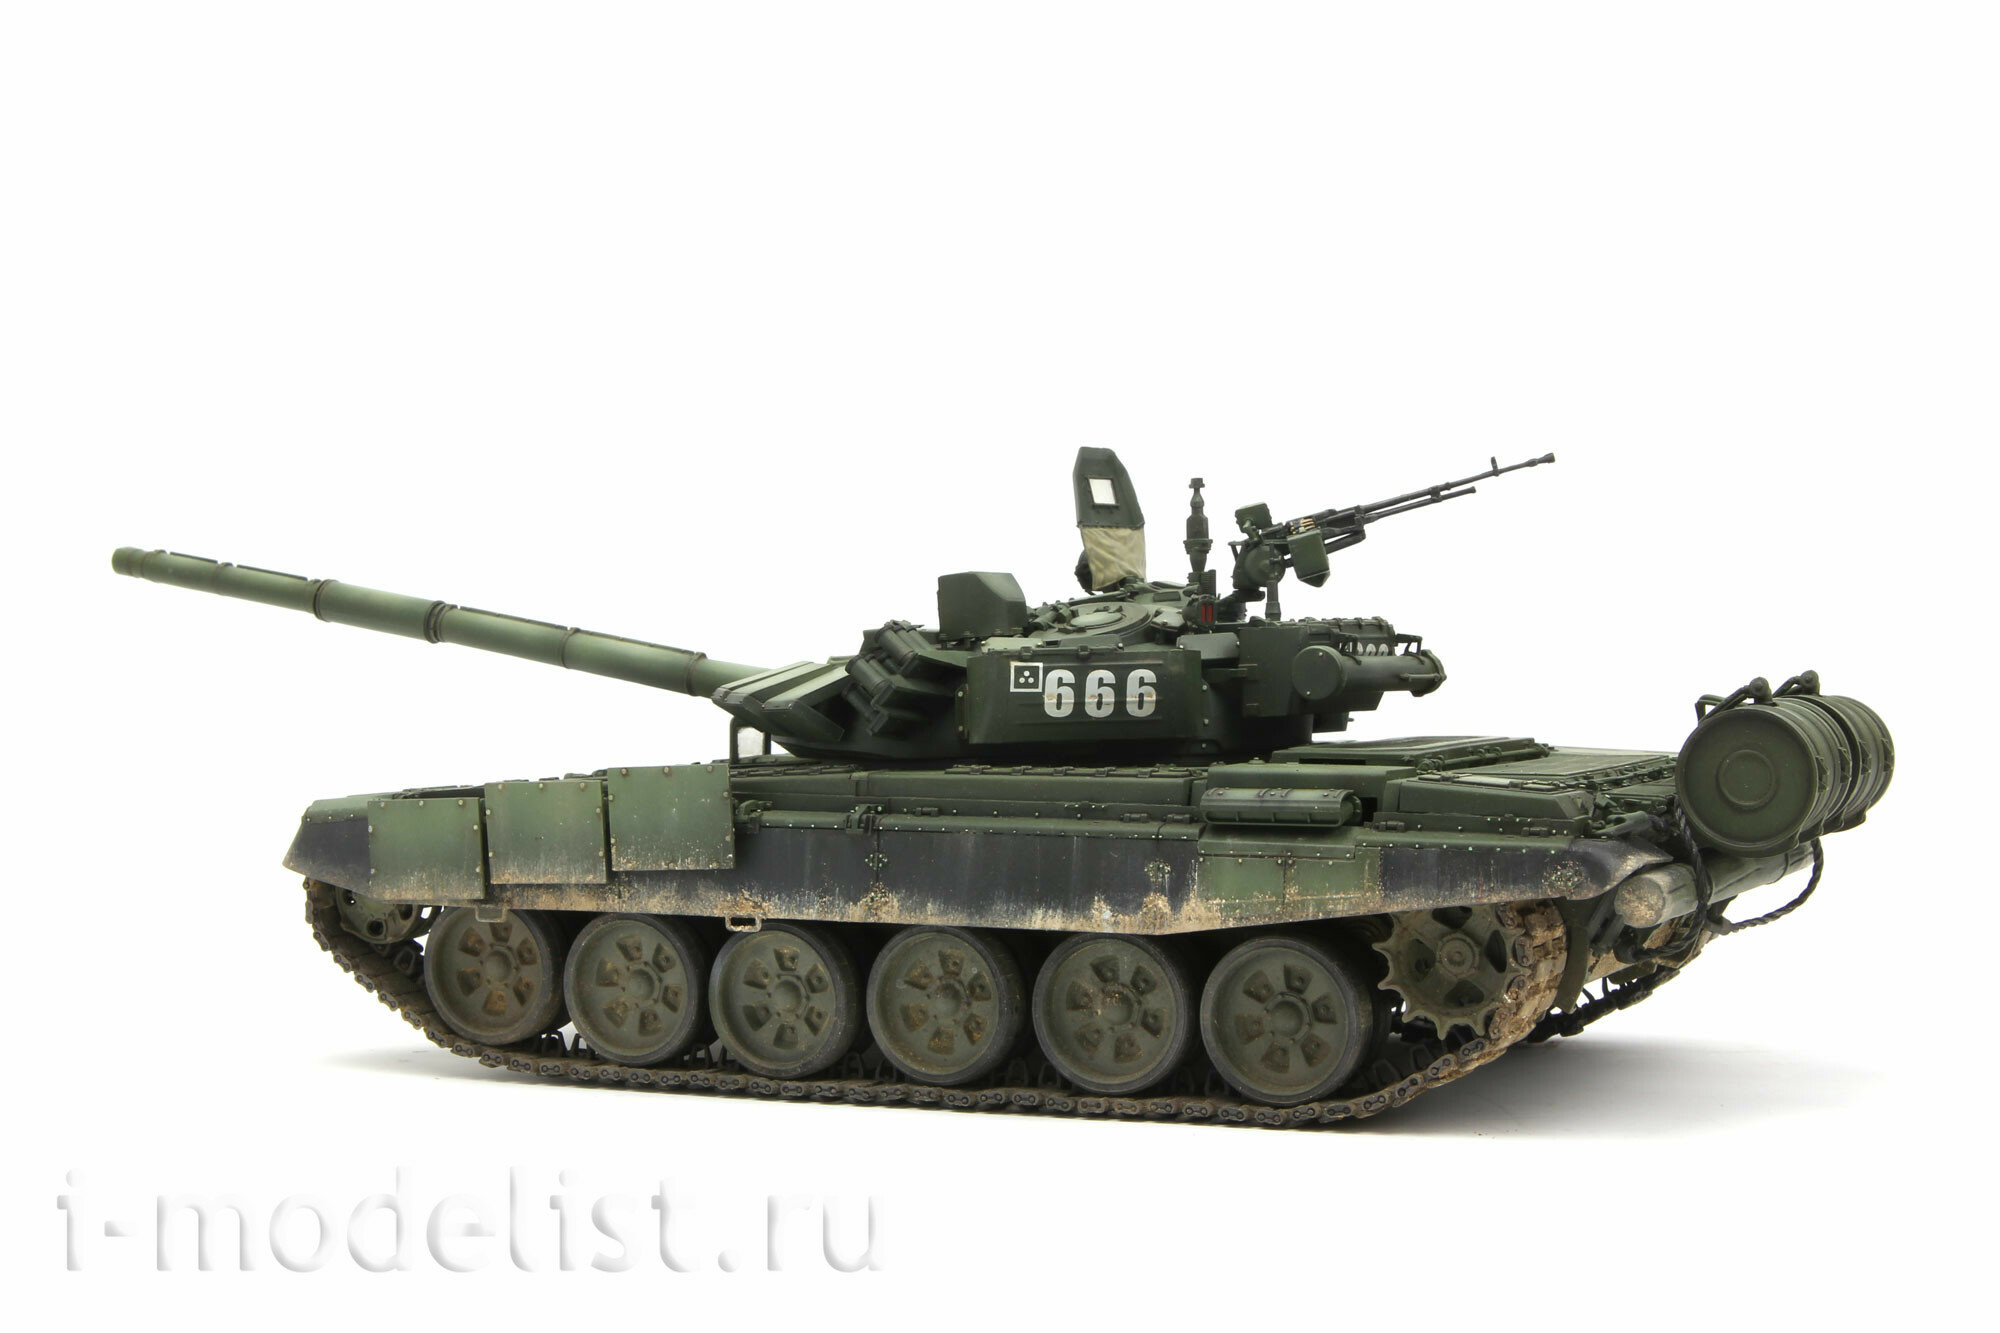 TS-028 Meng 1/35 T-72B3 Russian Main Battle Tank